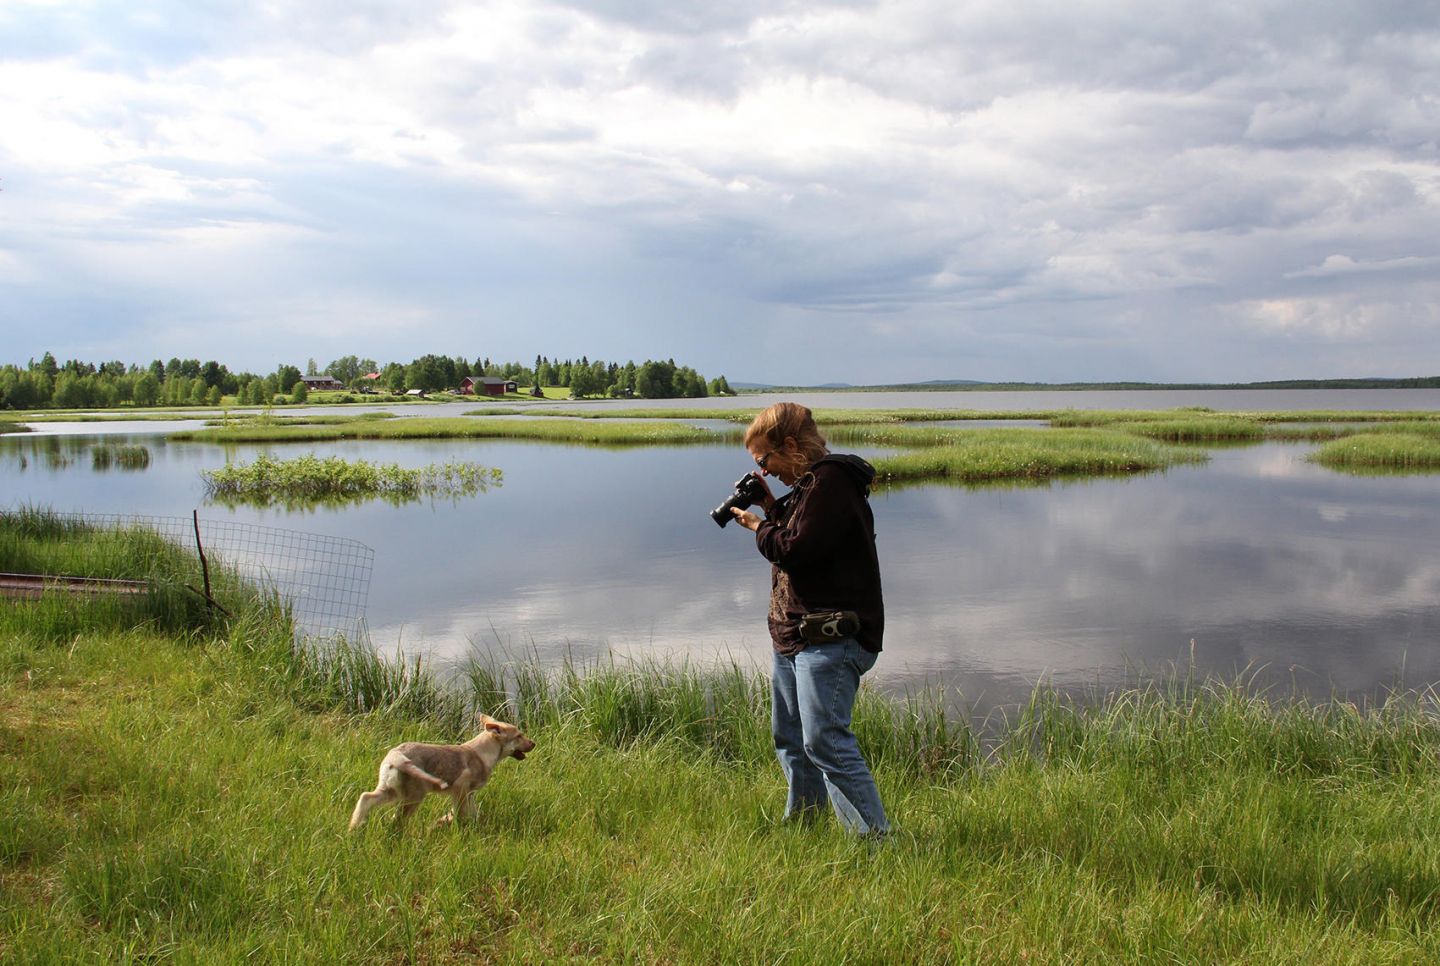 Location scout Lori Balton photographs a dog by a Lapland lake, during a fam trip with location scout Lori Balton